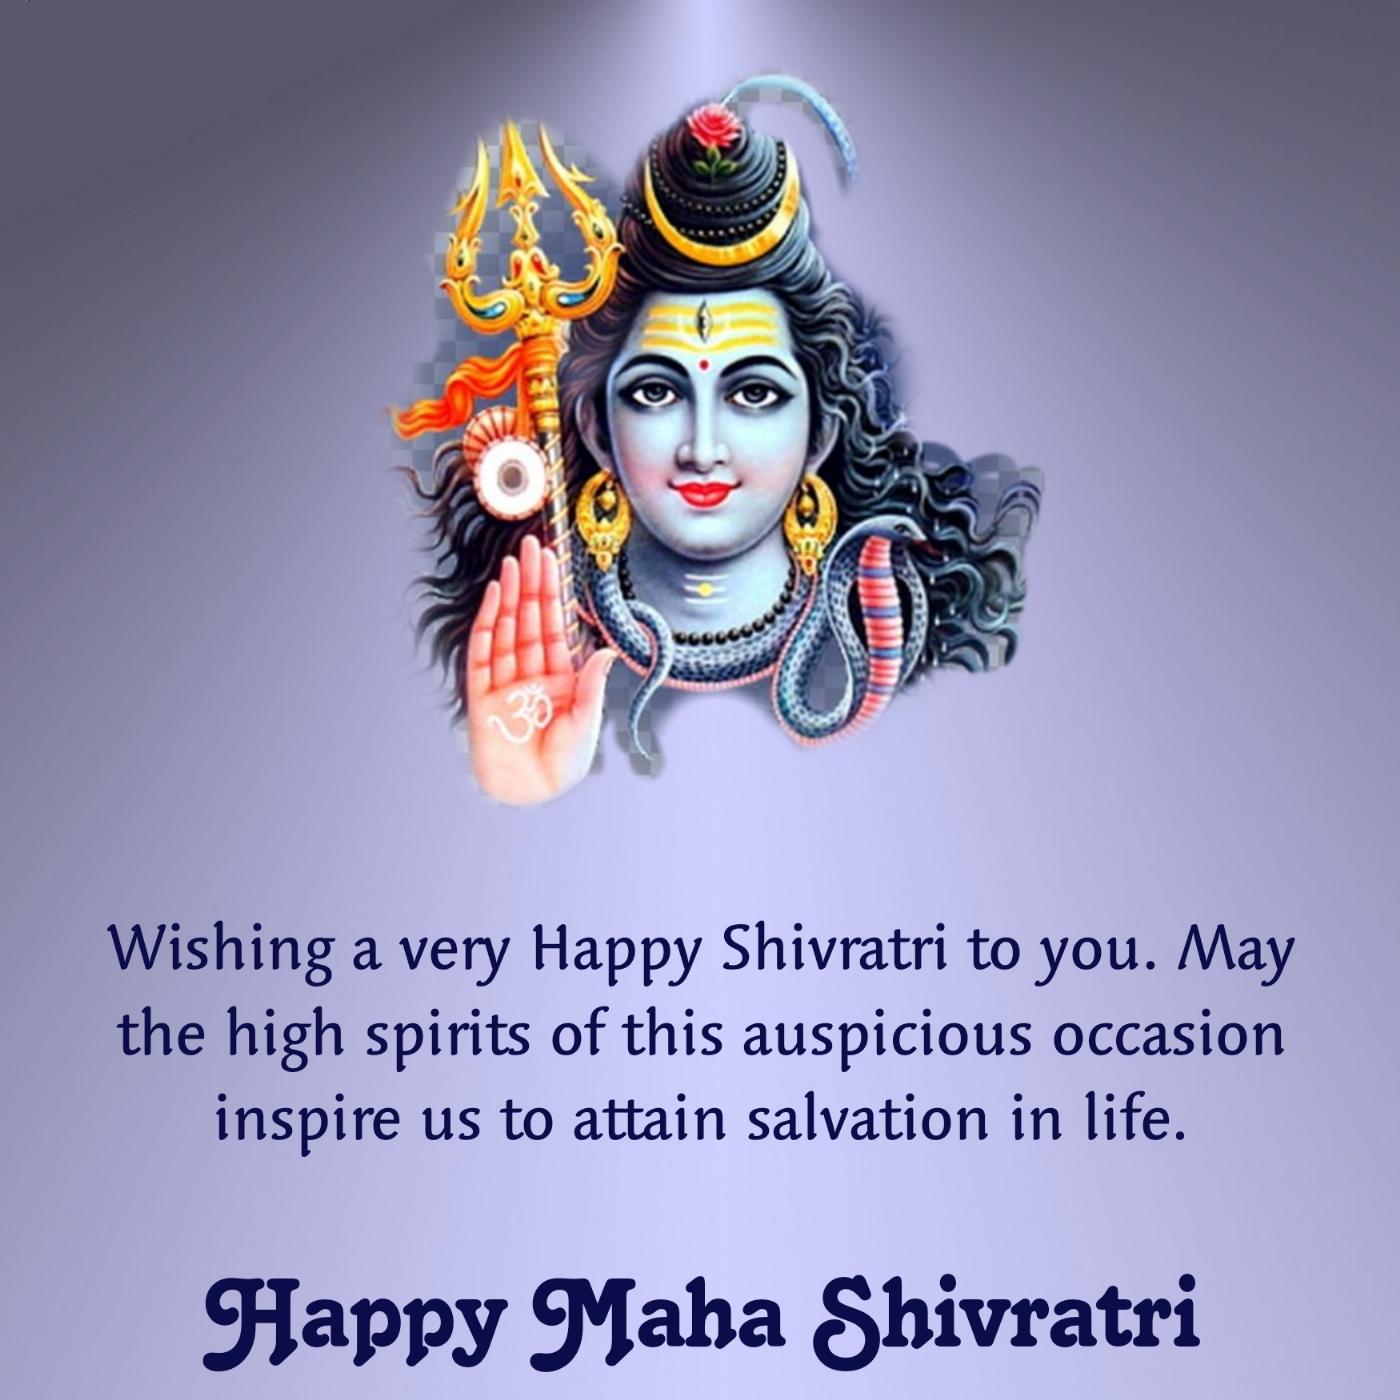 Wishing a very Happy Shivratri to you